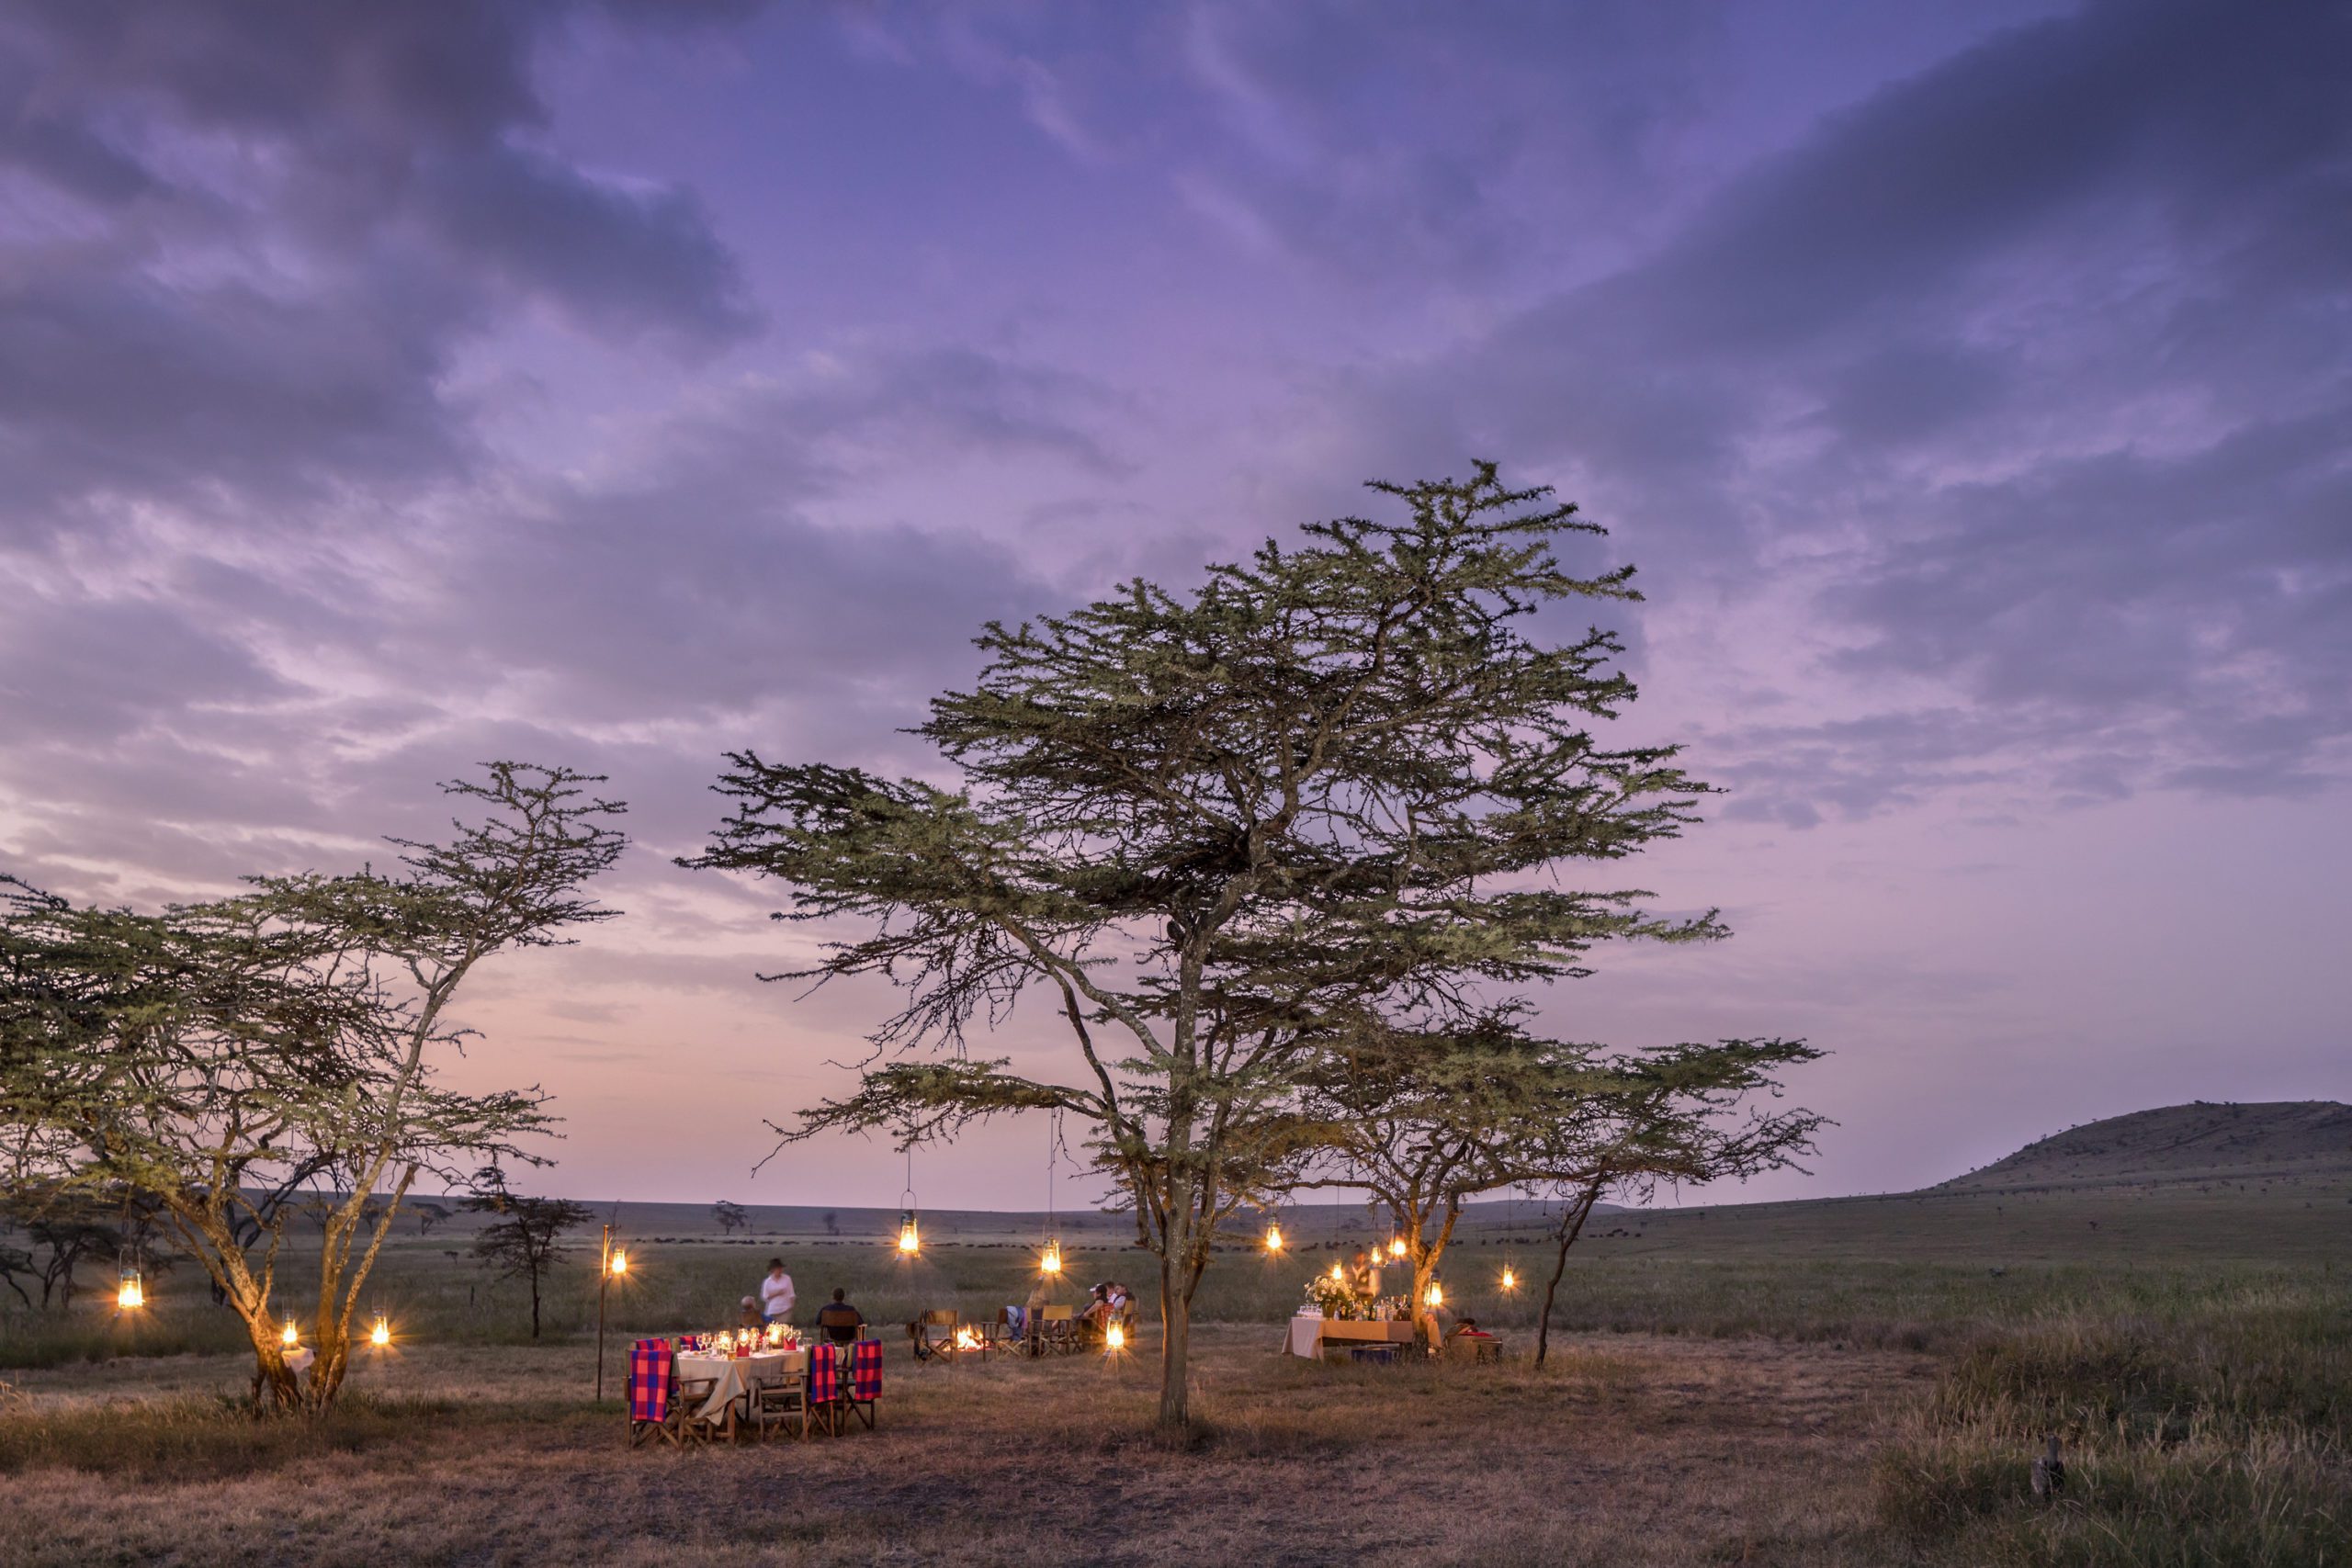 Protecting Kenya: A Luxury Conservation Safari